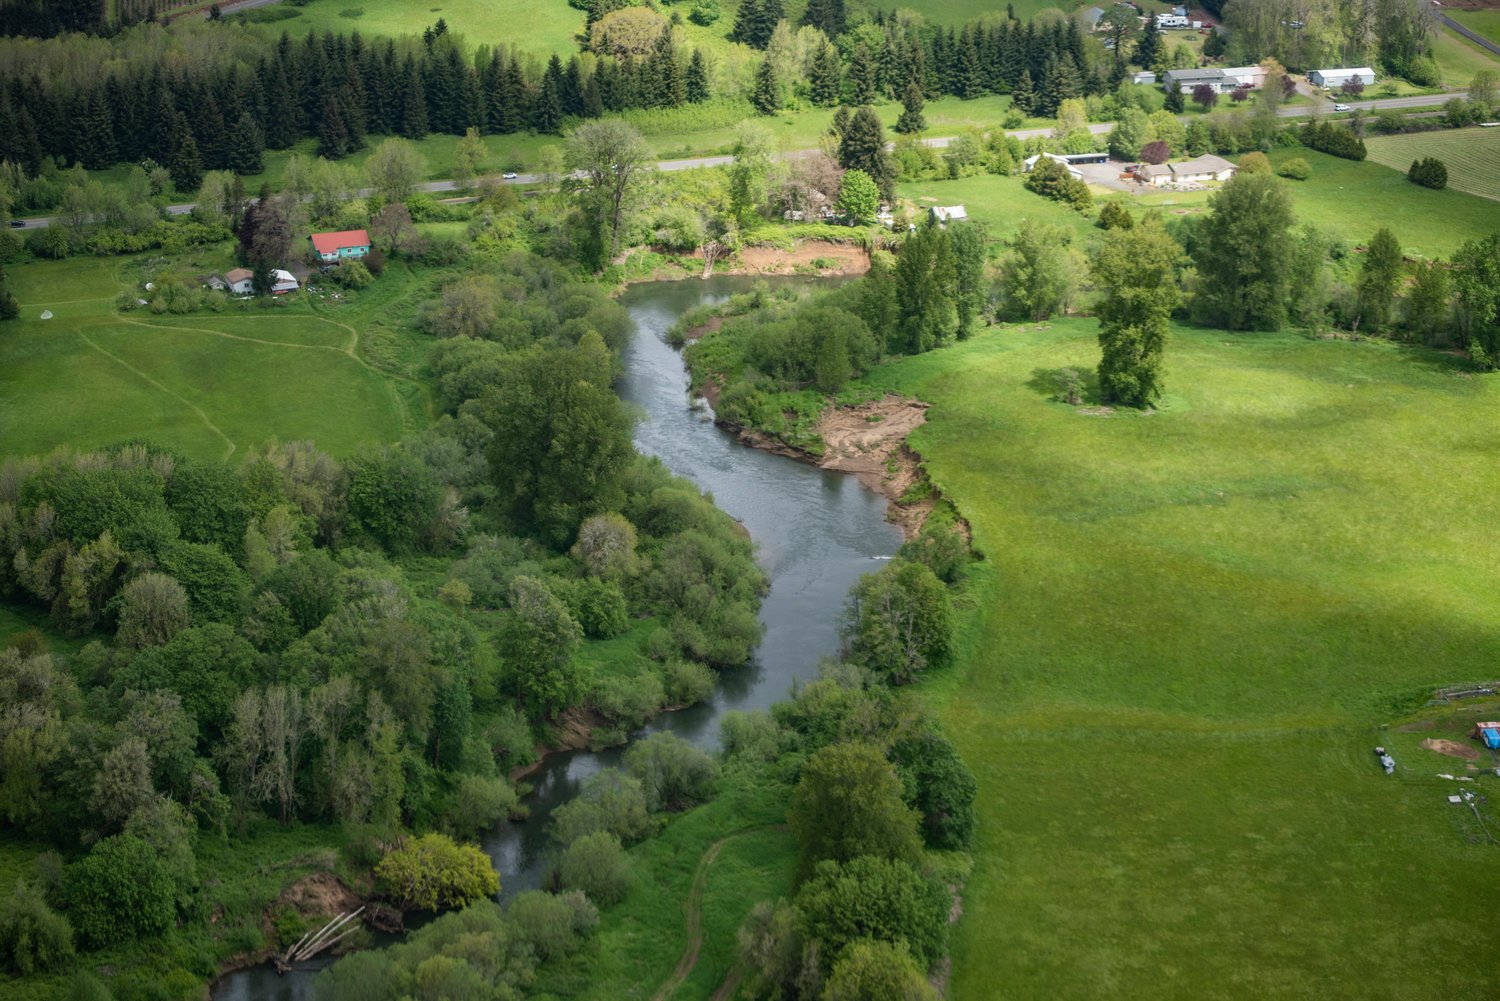 The Chehalis River runs through farmland near Doty and Dryad.